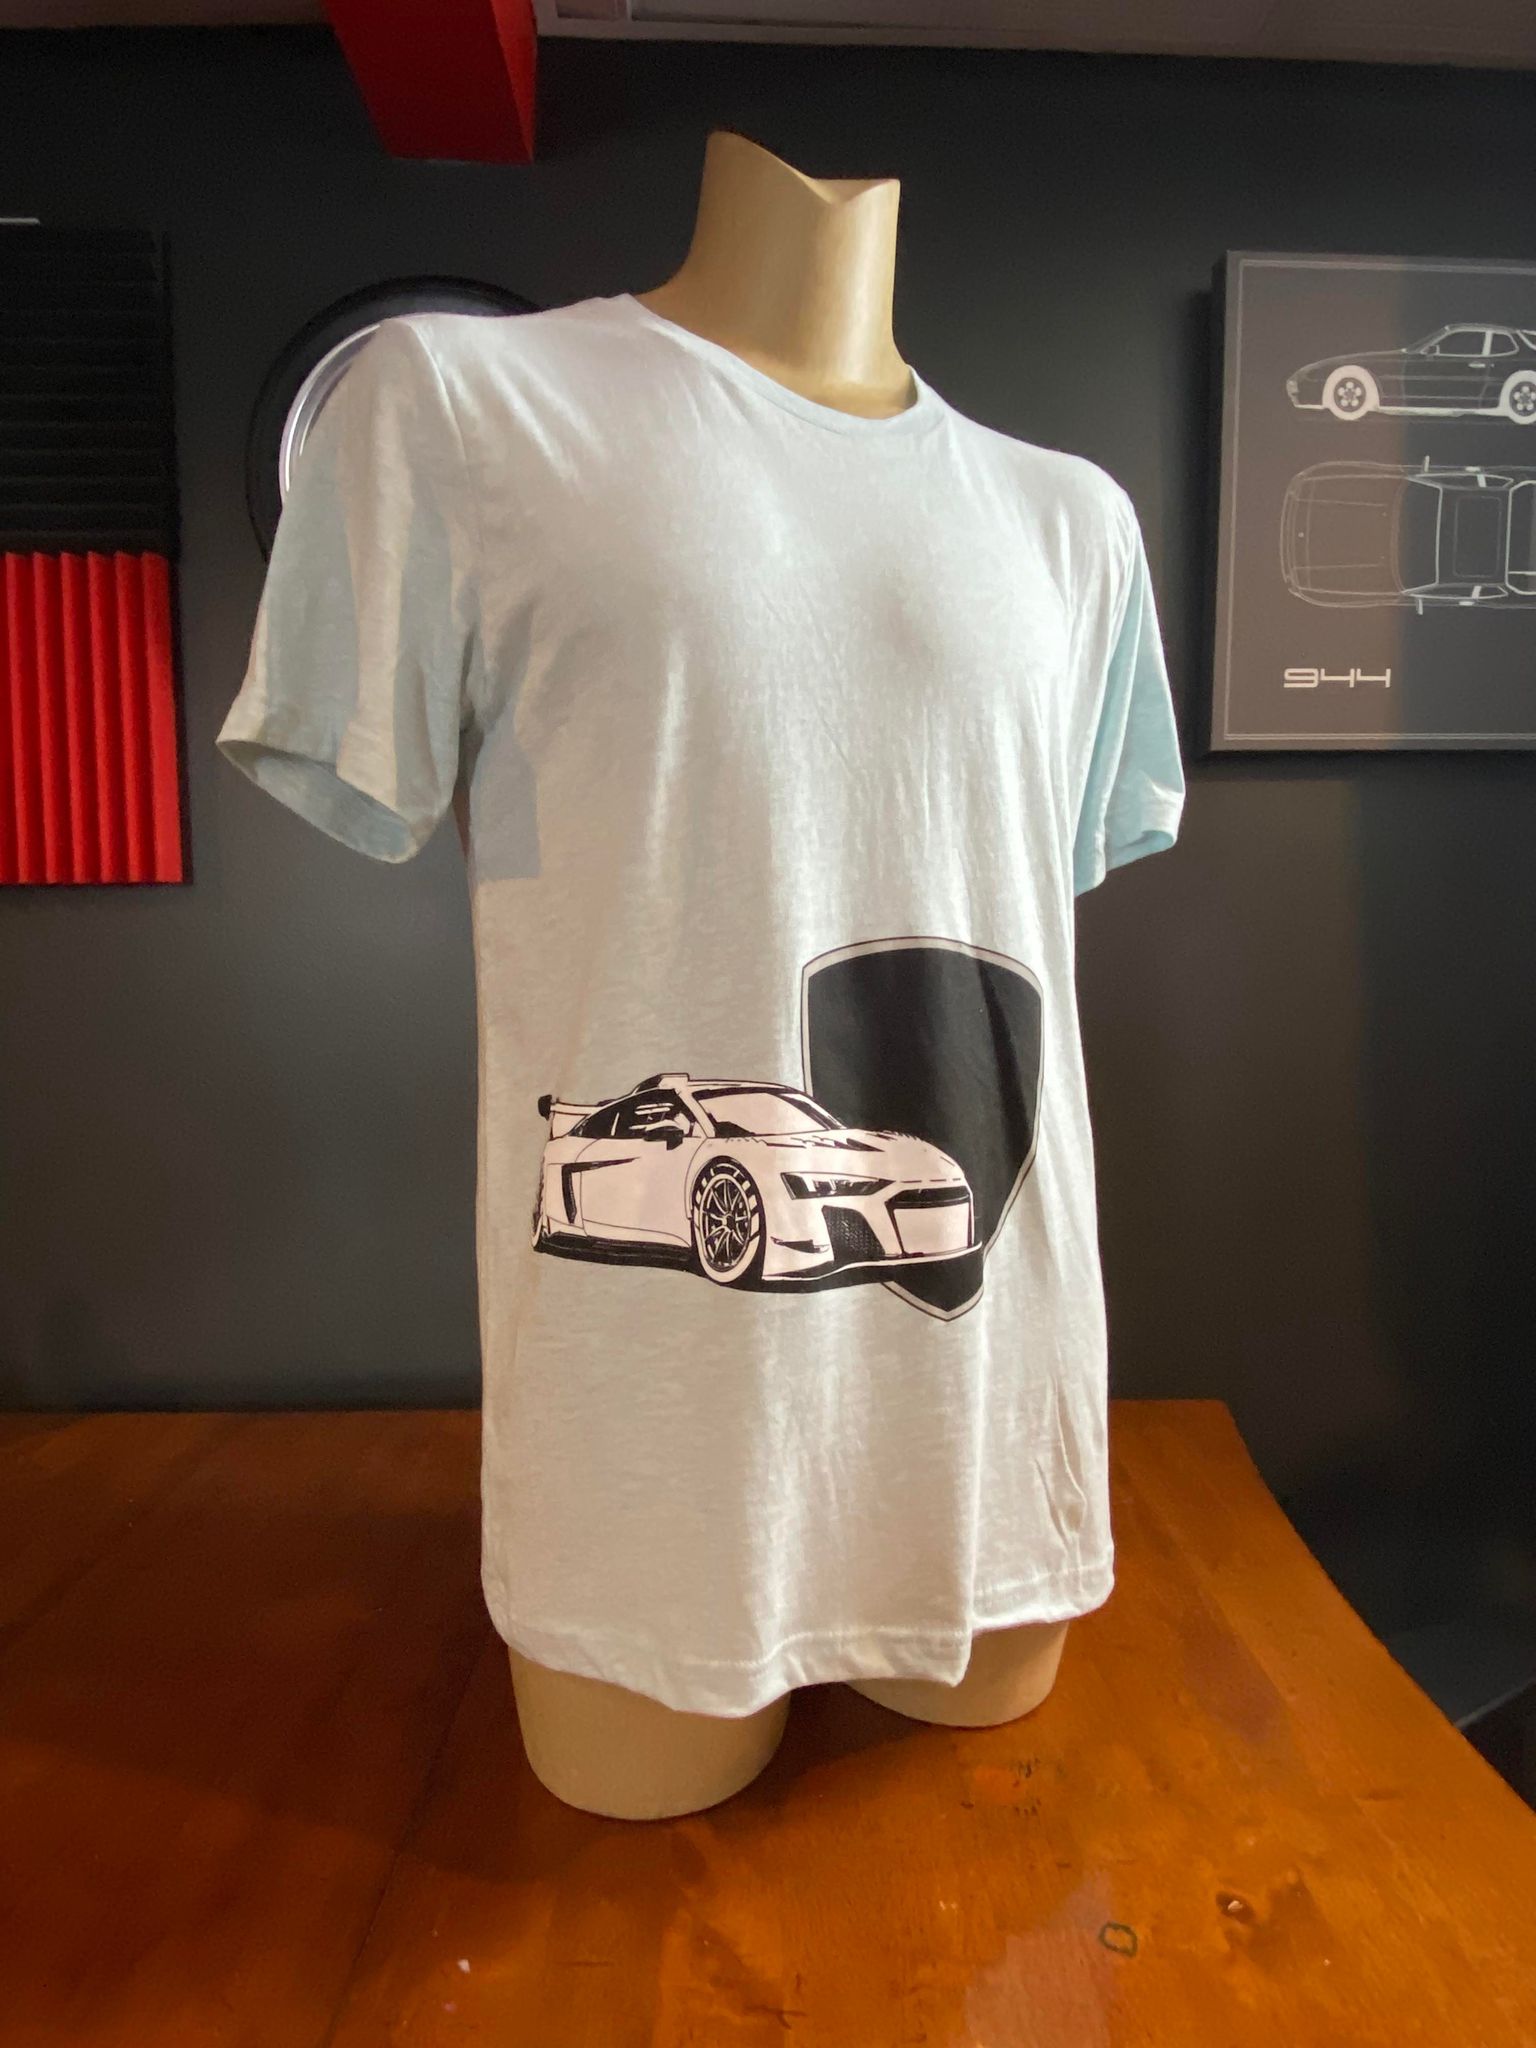 Executive Automotive Society Shield Supercar T-Shirt